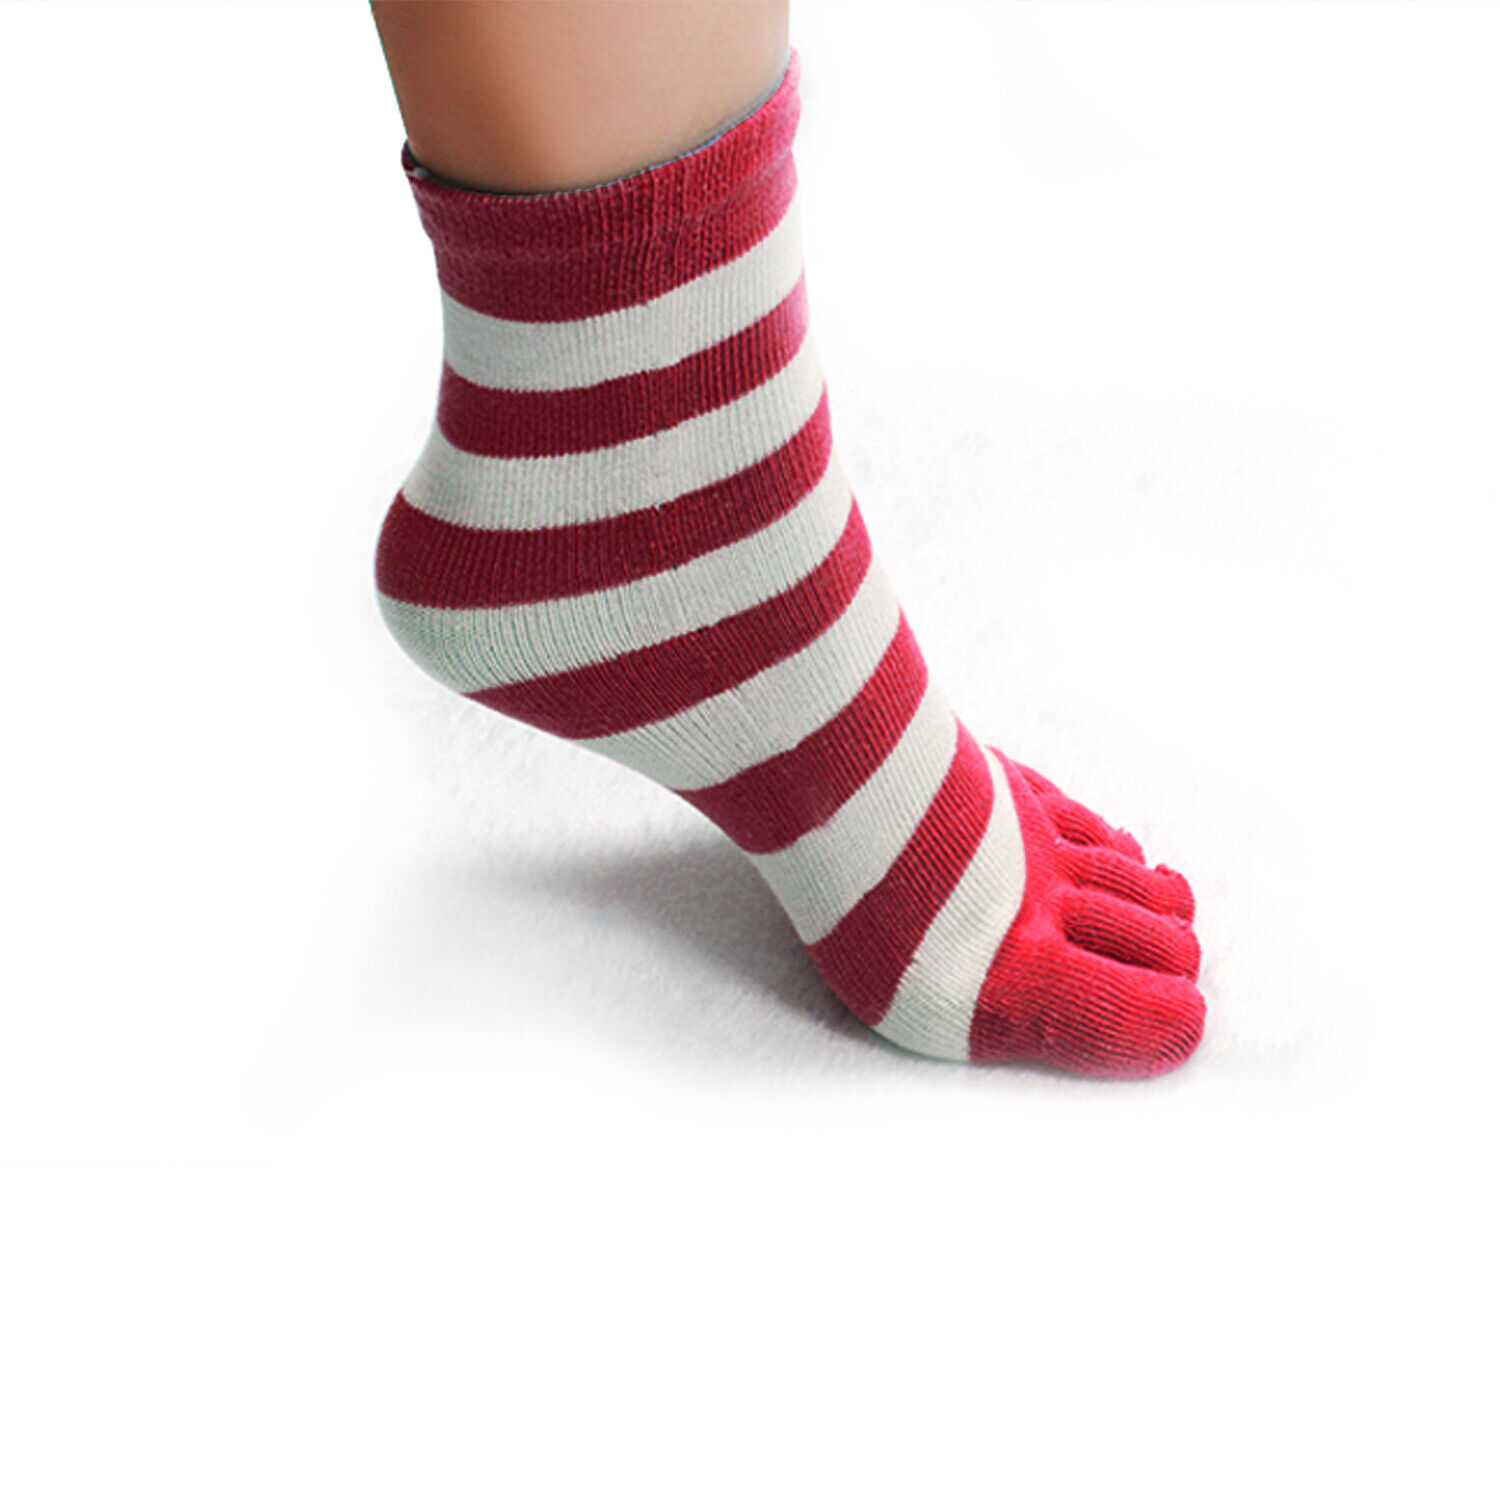 6 Pairs 5-Toes Warm Toe Socks Soft Breathable Ankle Athletic Fashion Socks Women N‘POLAR Does not apply - фотография #10